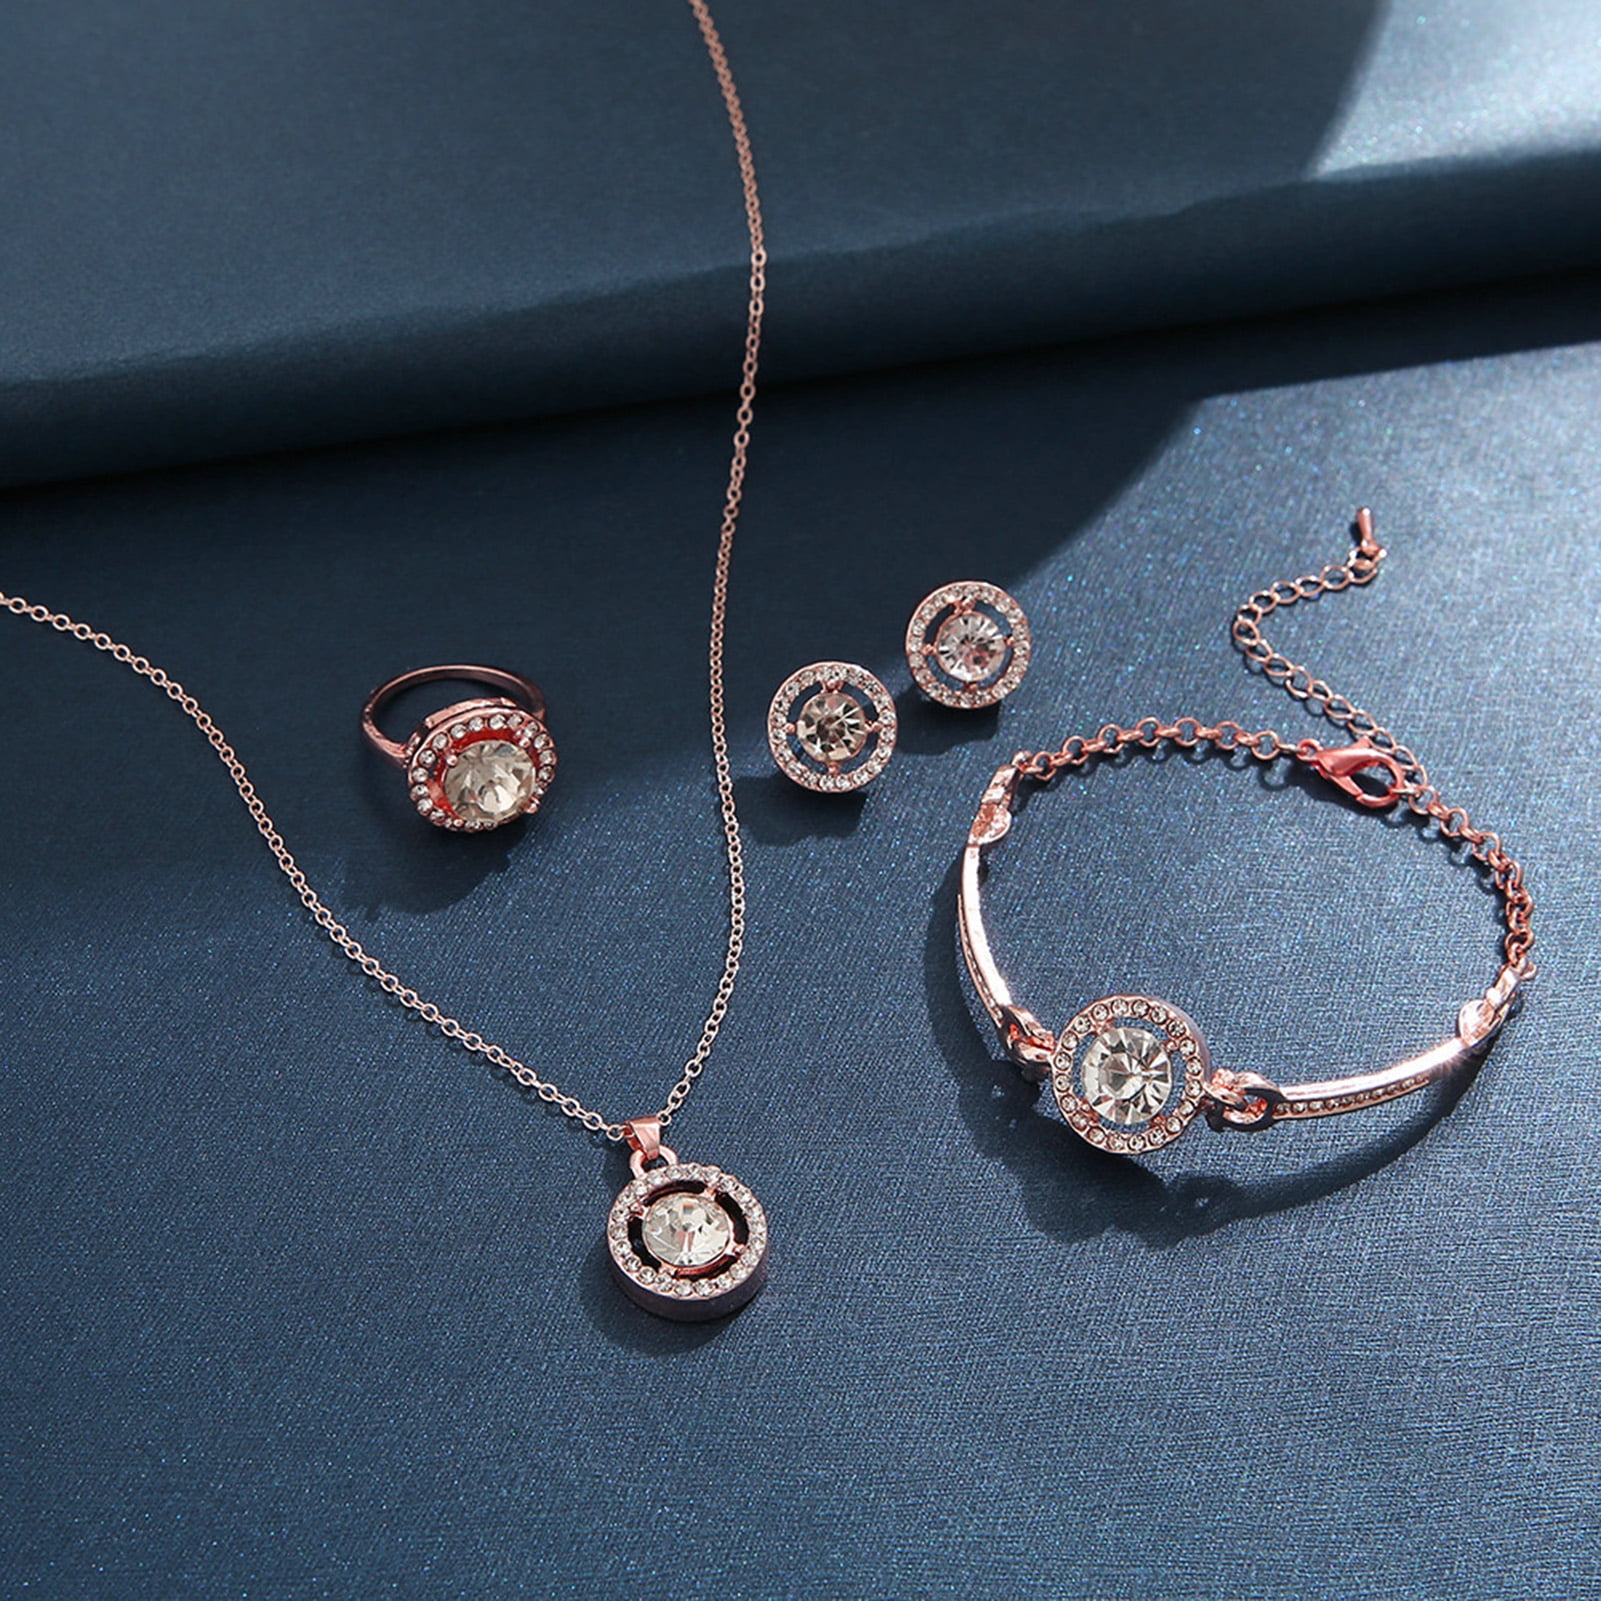 Rutiya 4Pcs/Set Necklace Earrings Ring Bracelet Hollow Out Heart Pendant  Jewelry Korean Style Simple Jewelry Set for Daily Wear - Walmart.com